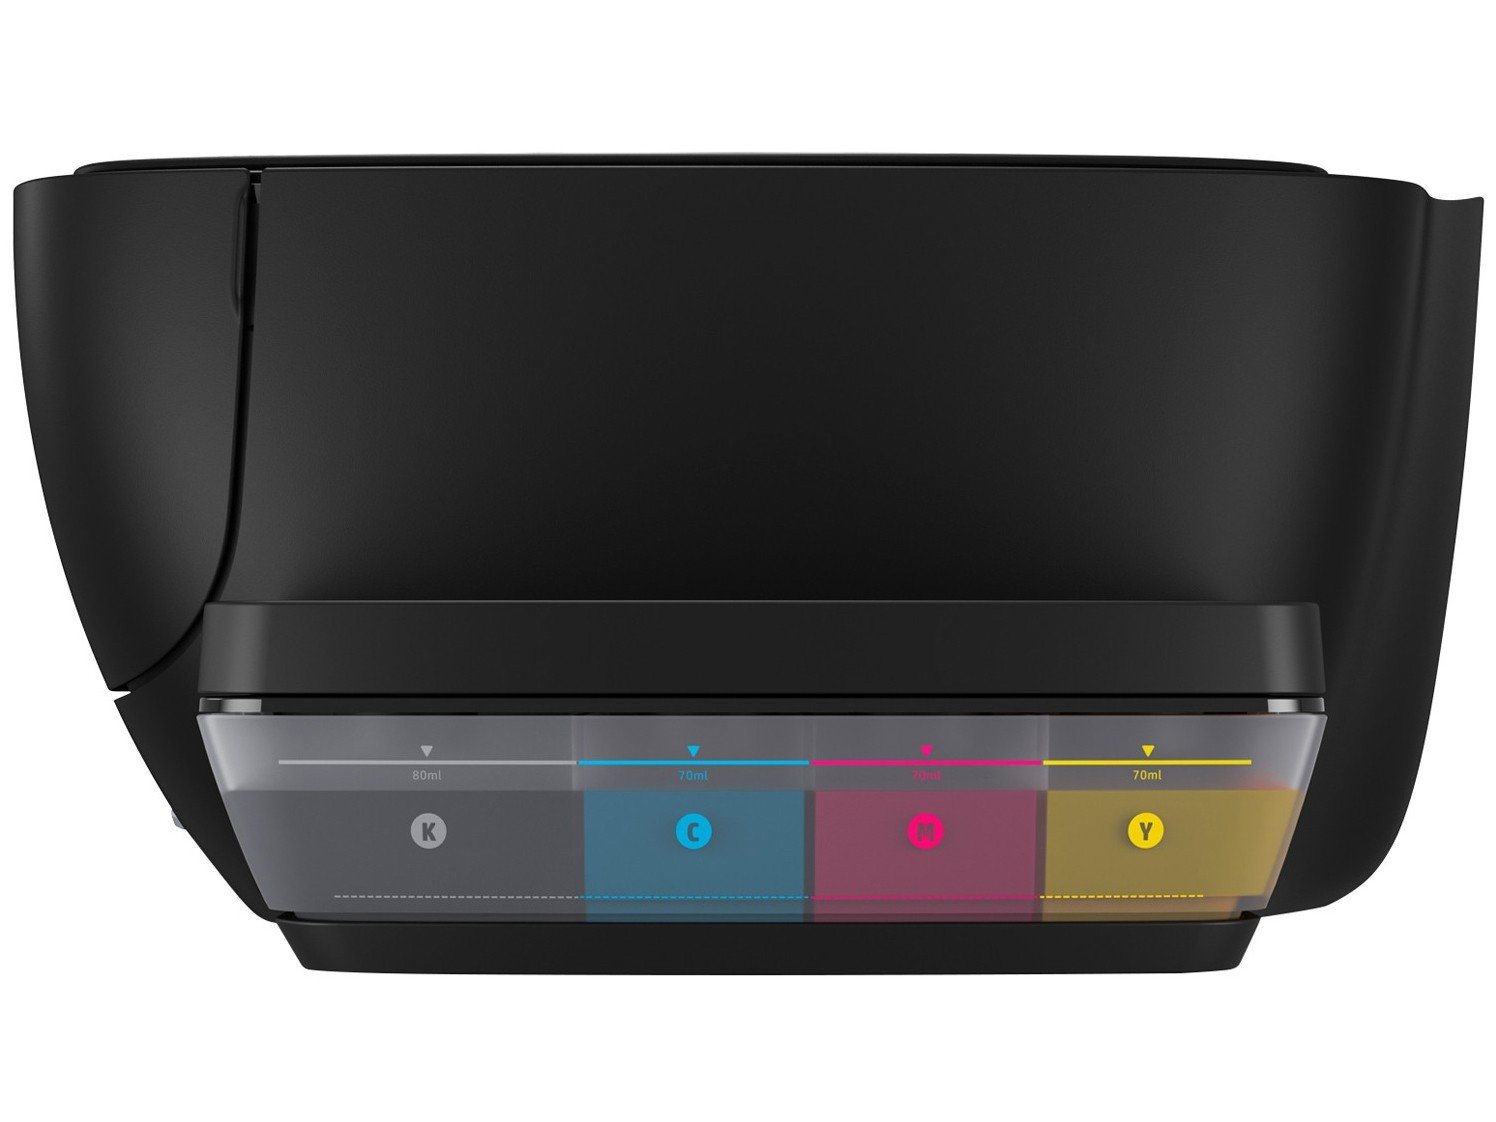 Impressora Multifuncional HP Ink Tank Wi-Fi 416 - Tanque de Tinta Wireless Colorida USB - Bivolt - 3